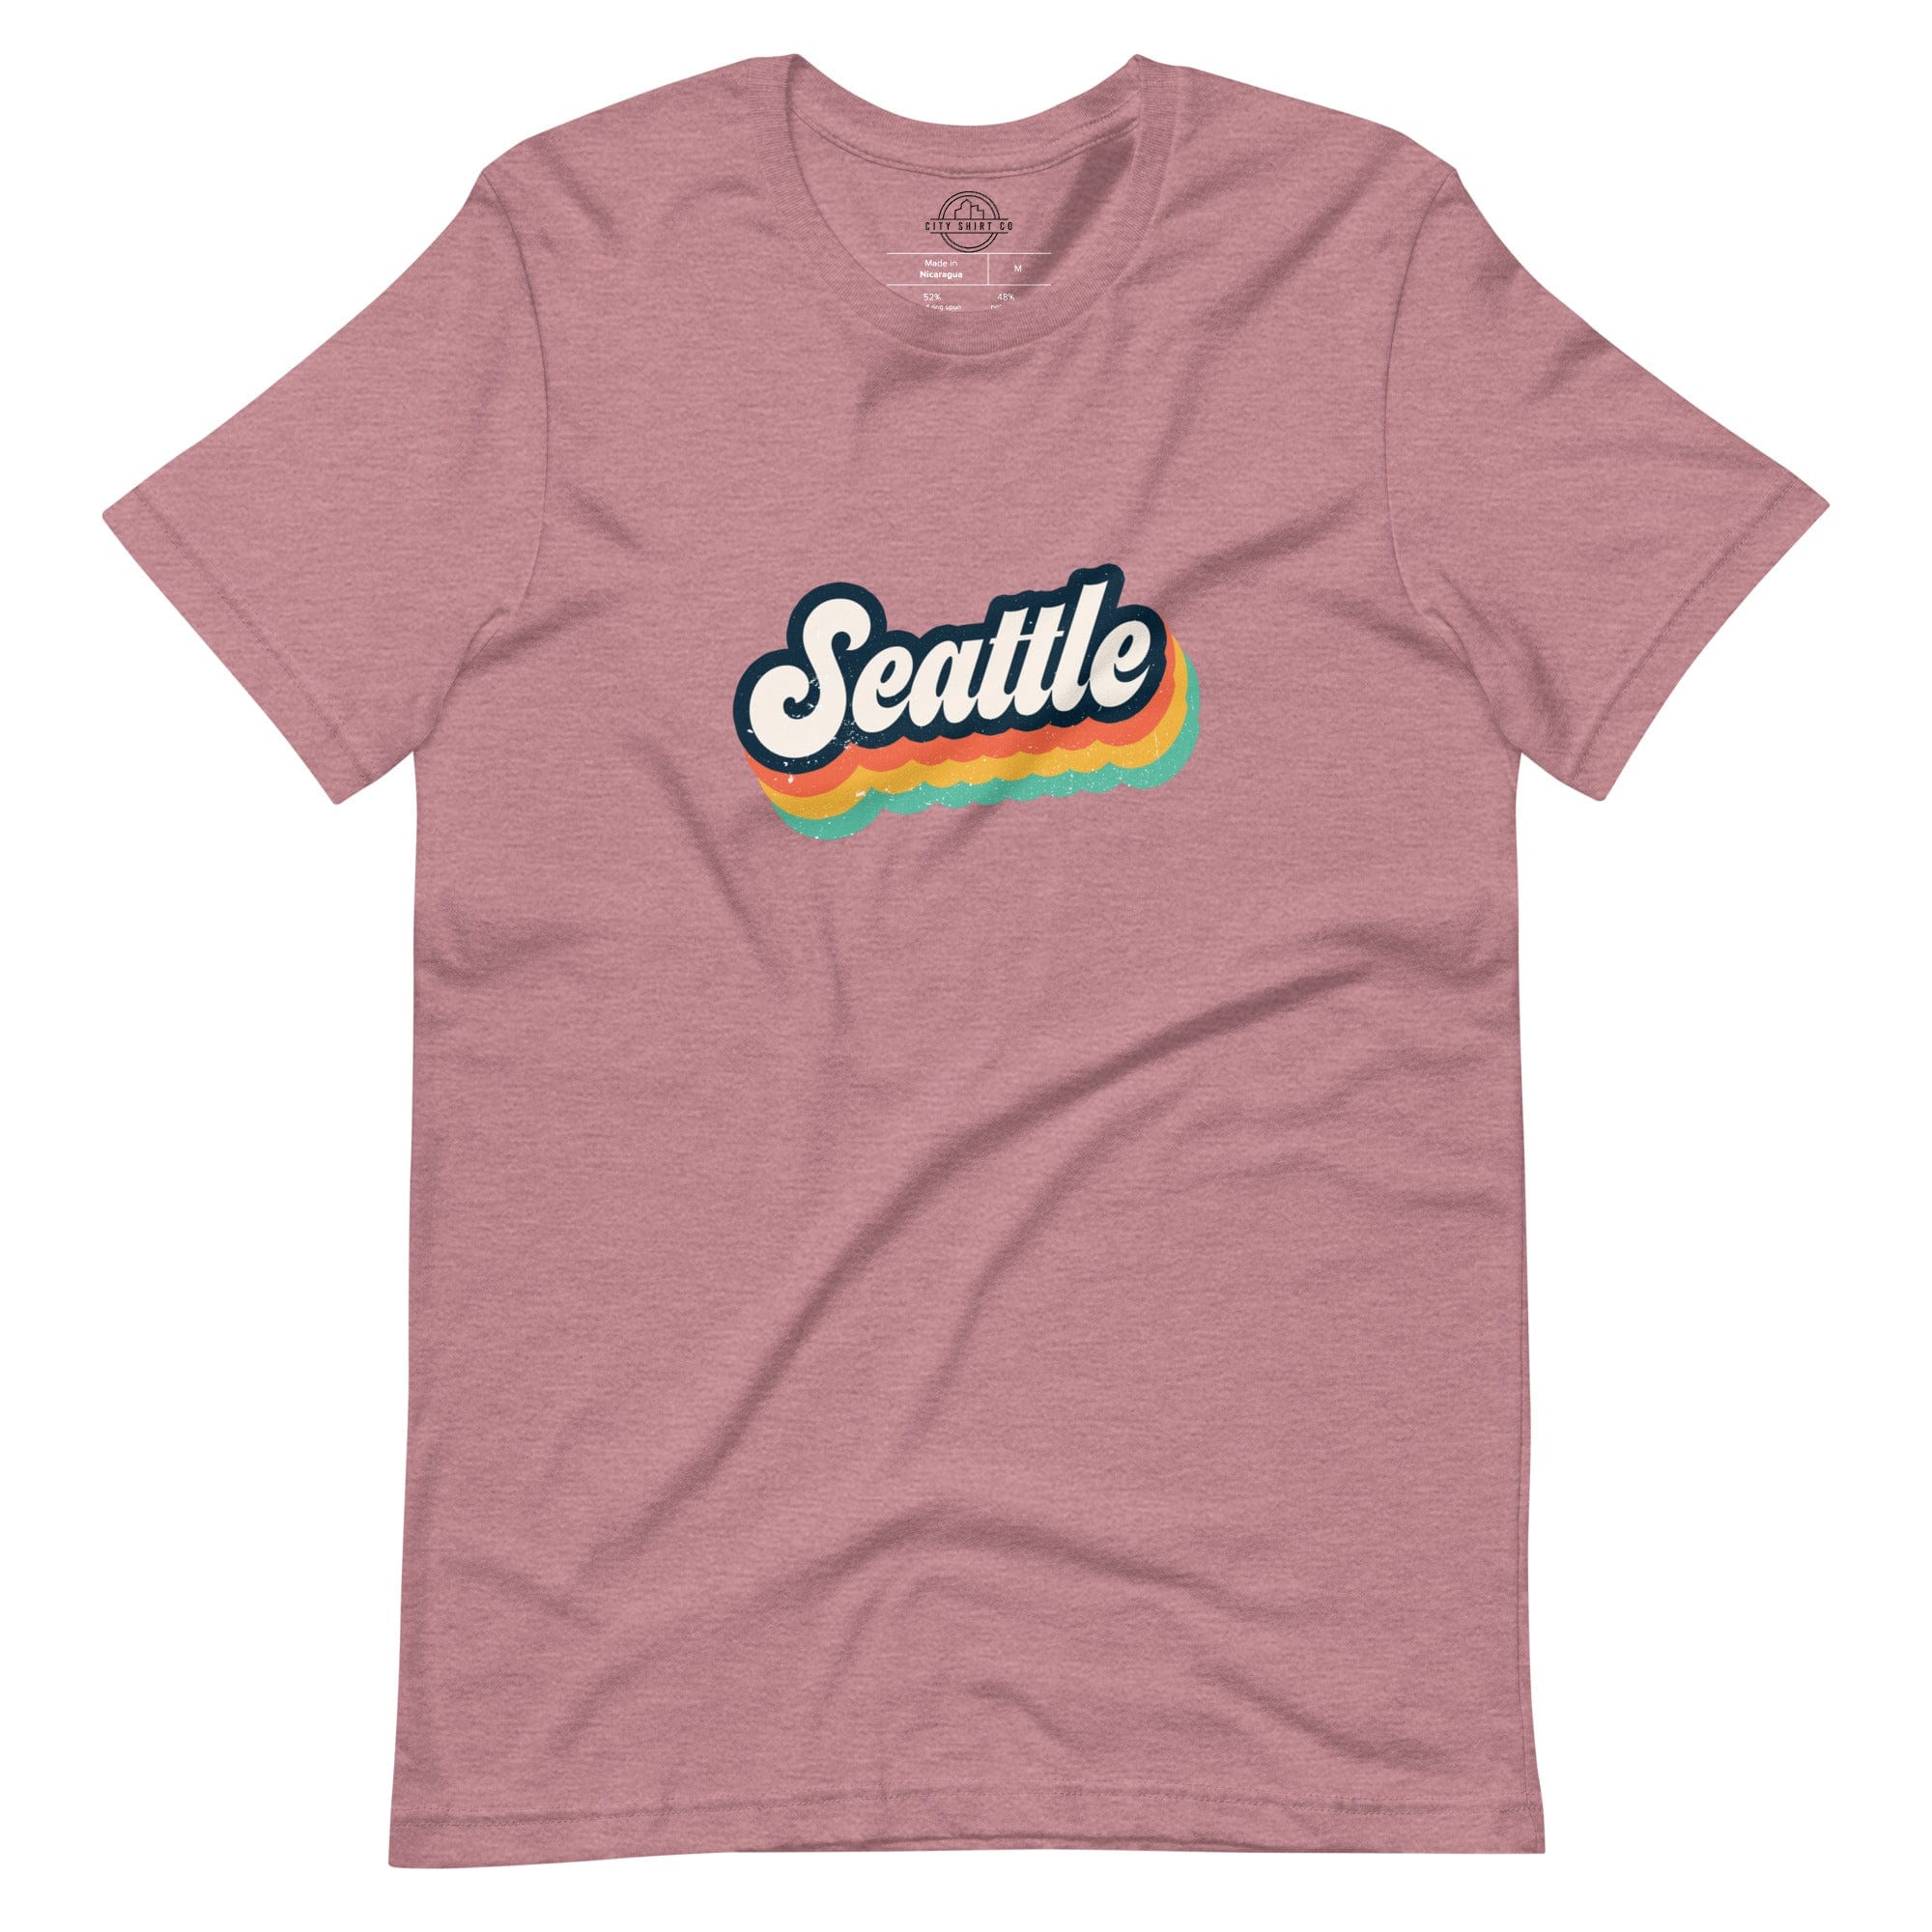 City Shirt Co Seattle Retro T-Shirt Heather Orchid / S